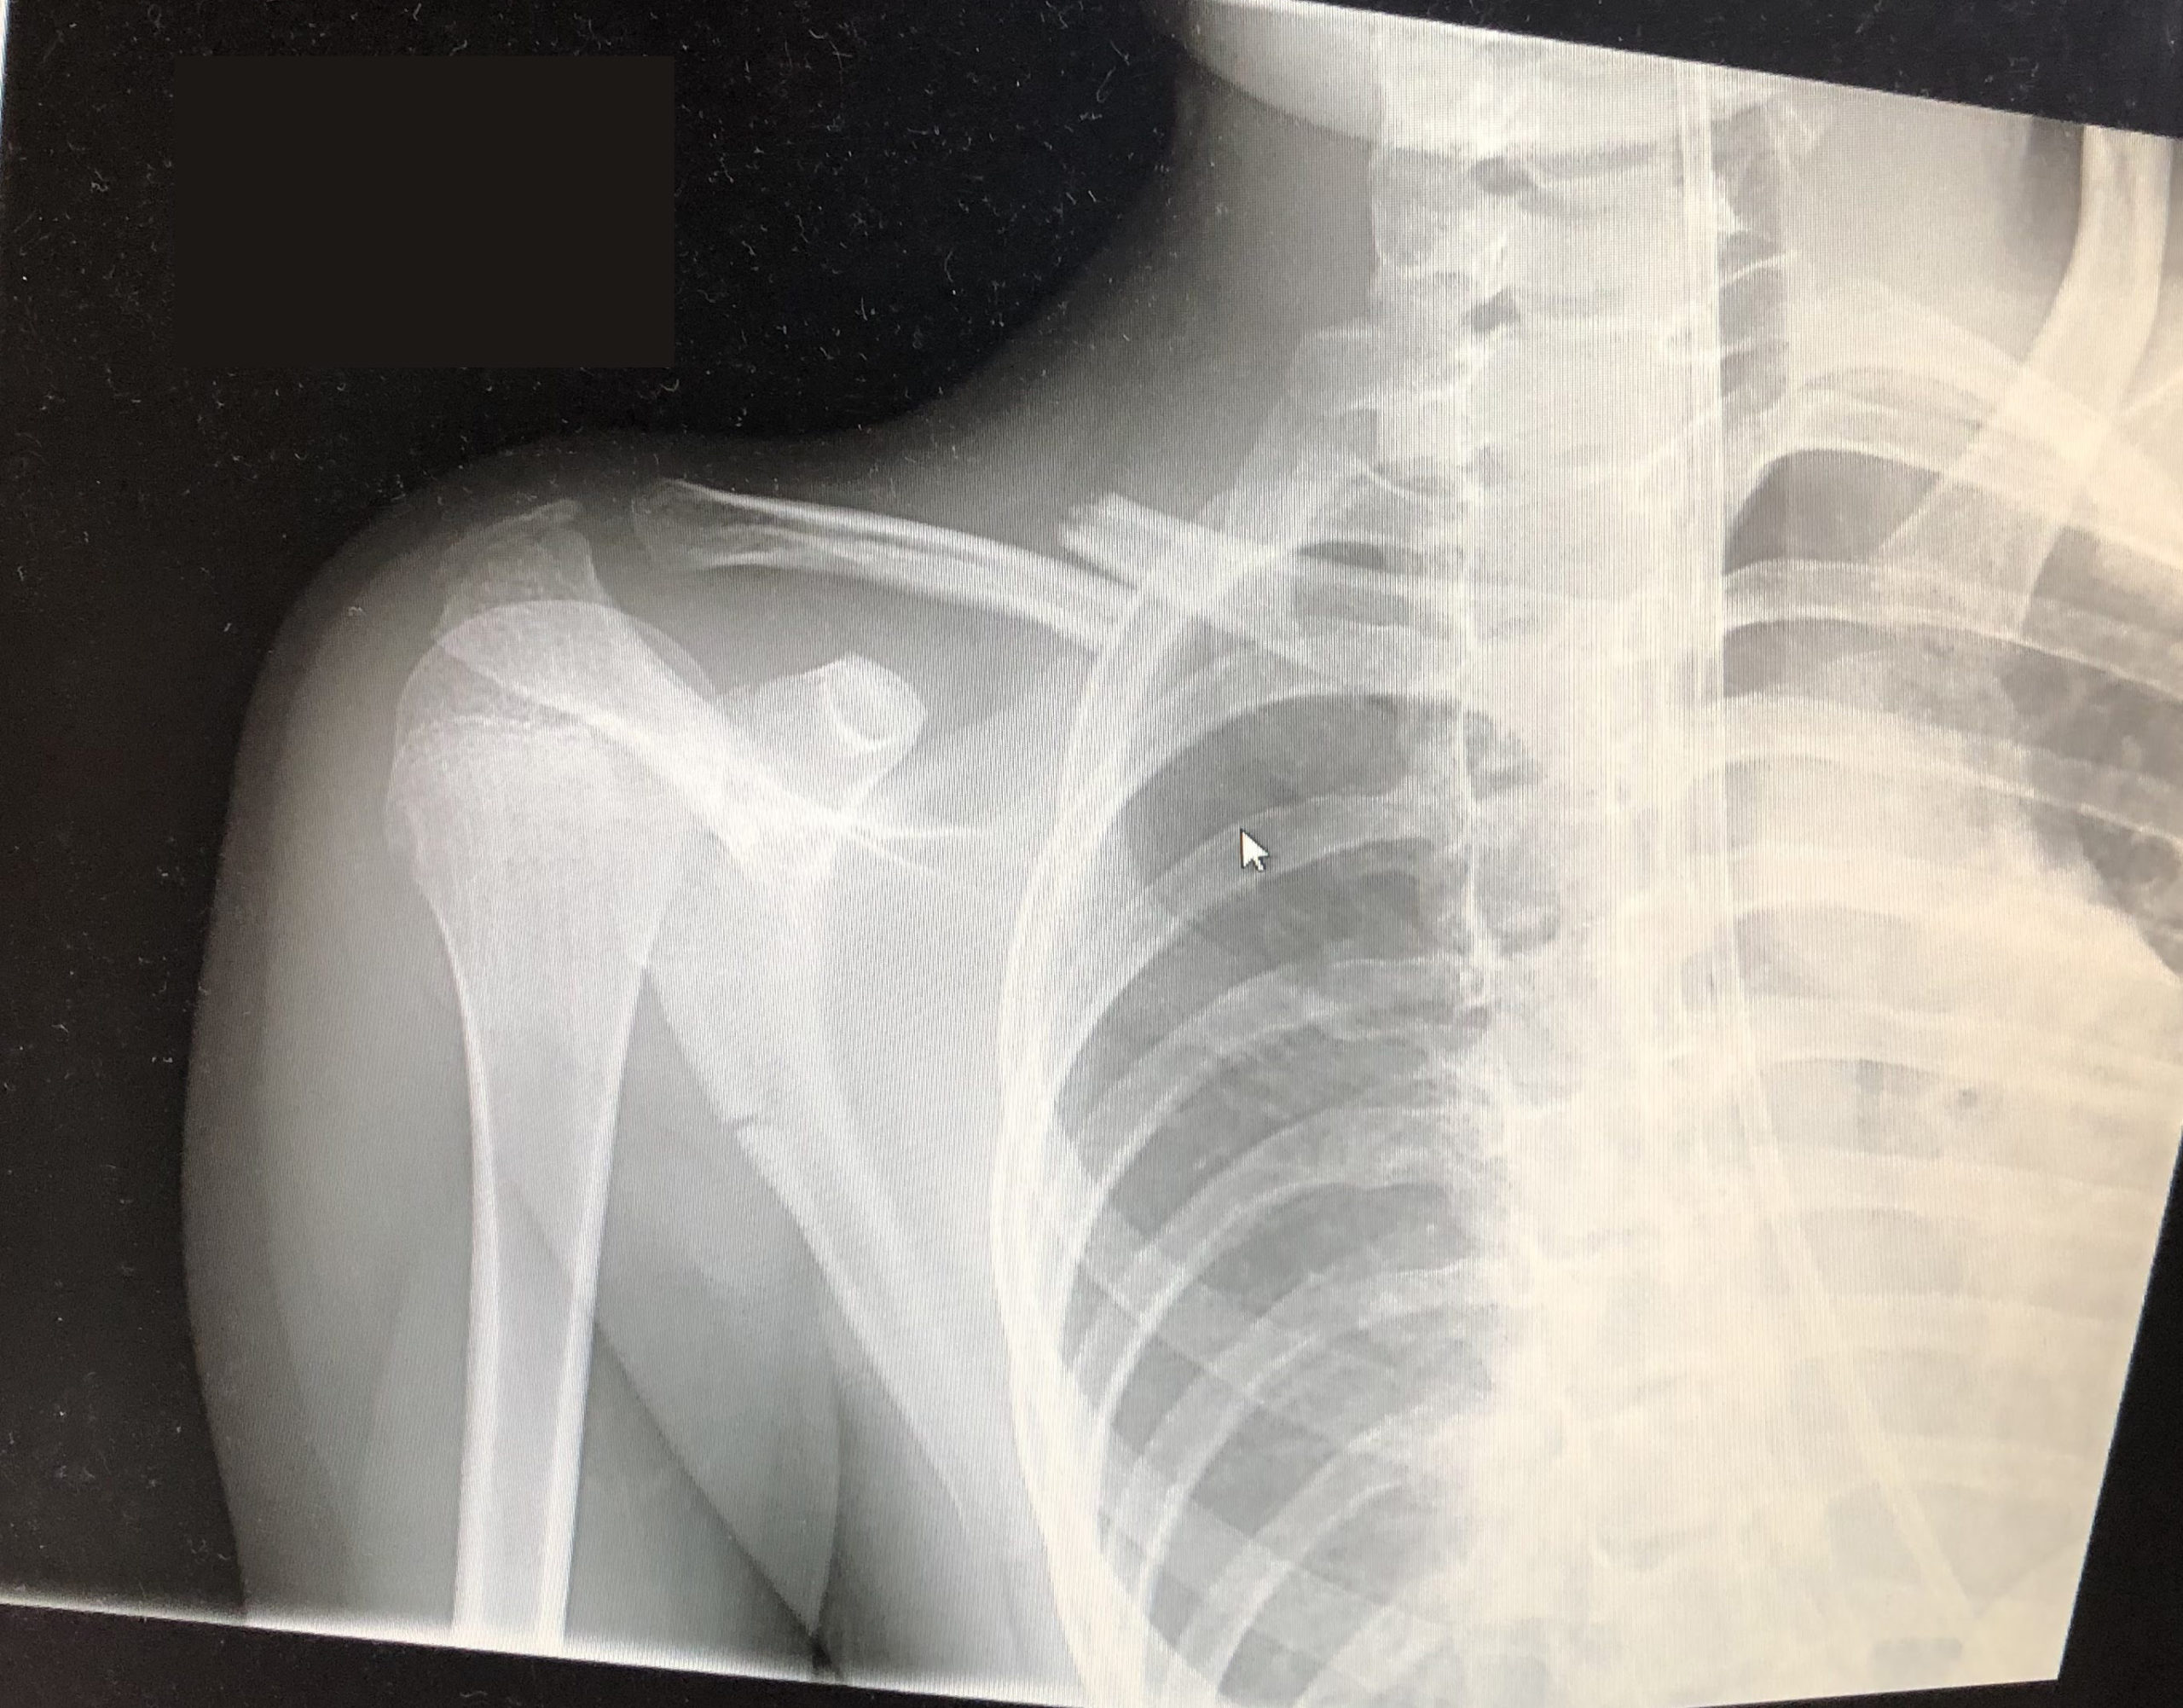 An x-ray showing a broken collar bone